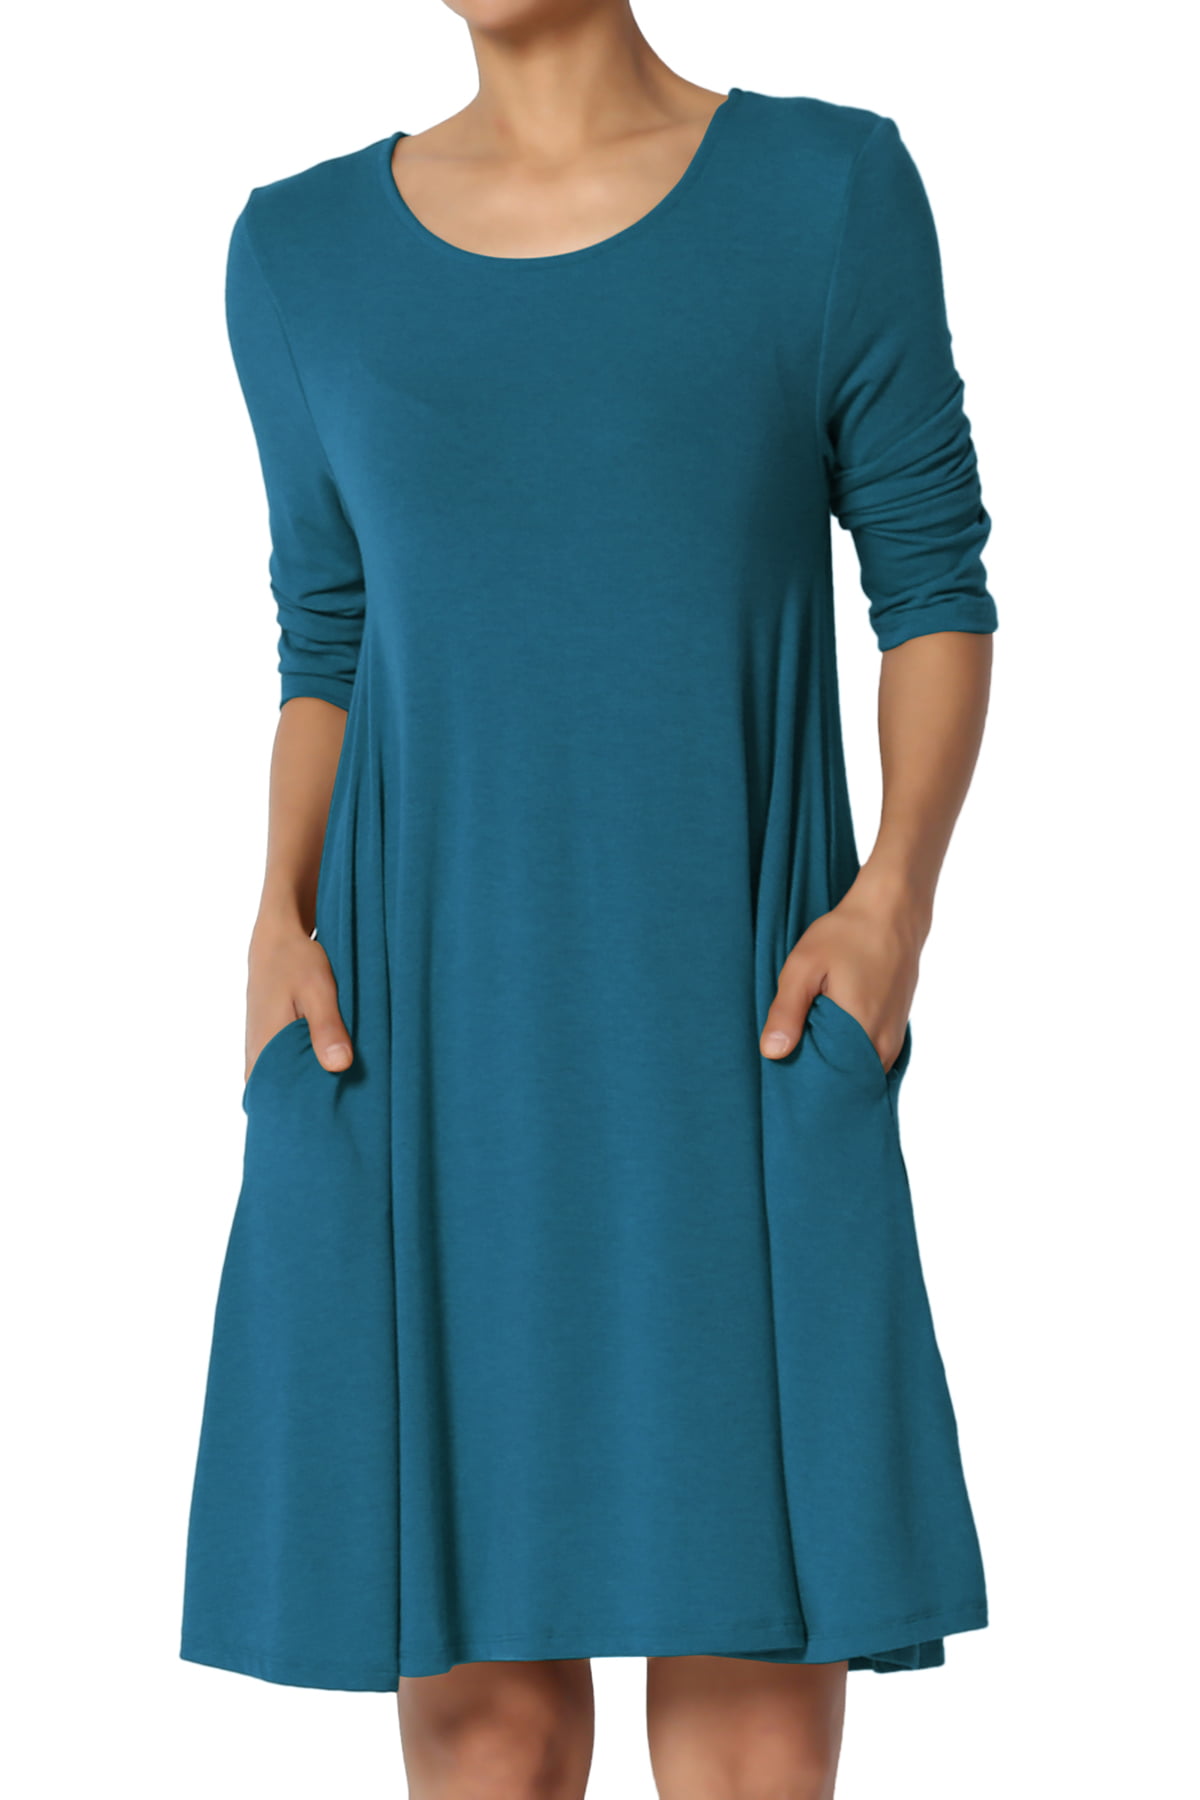 TheMogan Women's PLUS Basic 3/4 Sleeve Swing Flared Tunic Dress Pocket ...